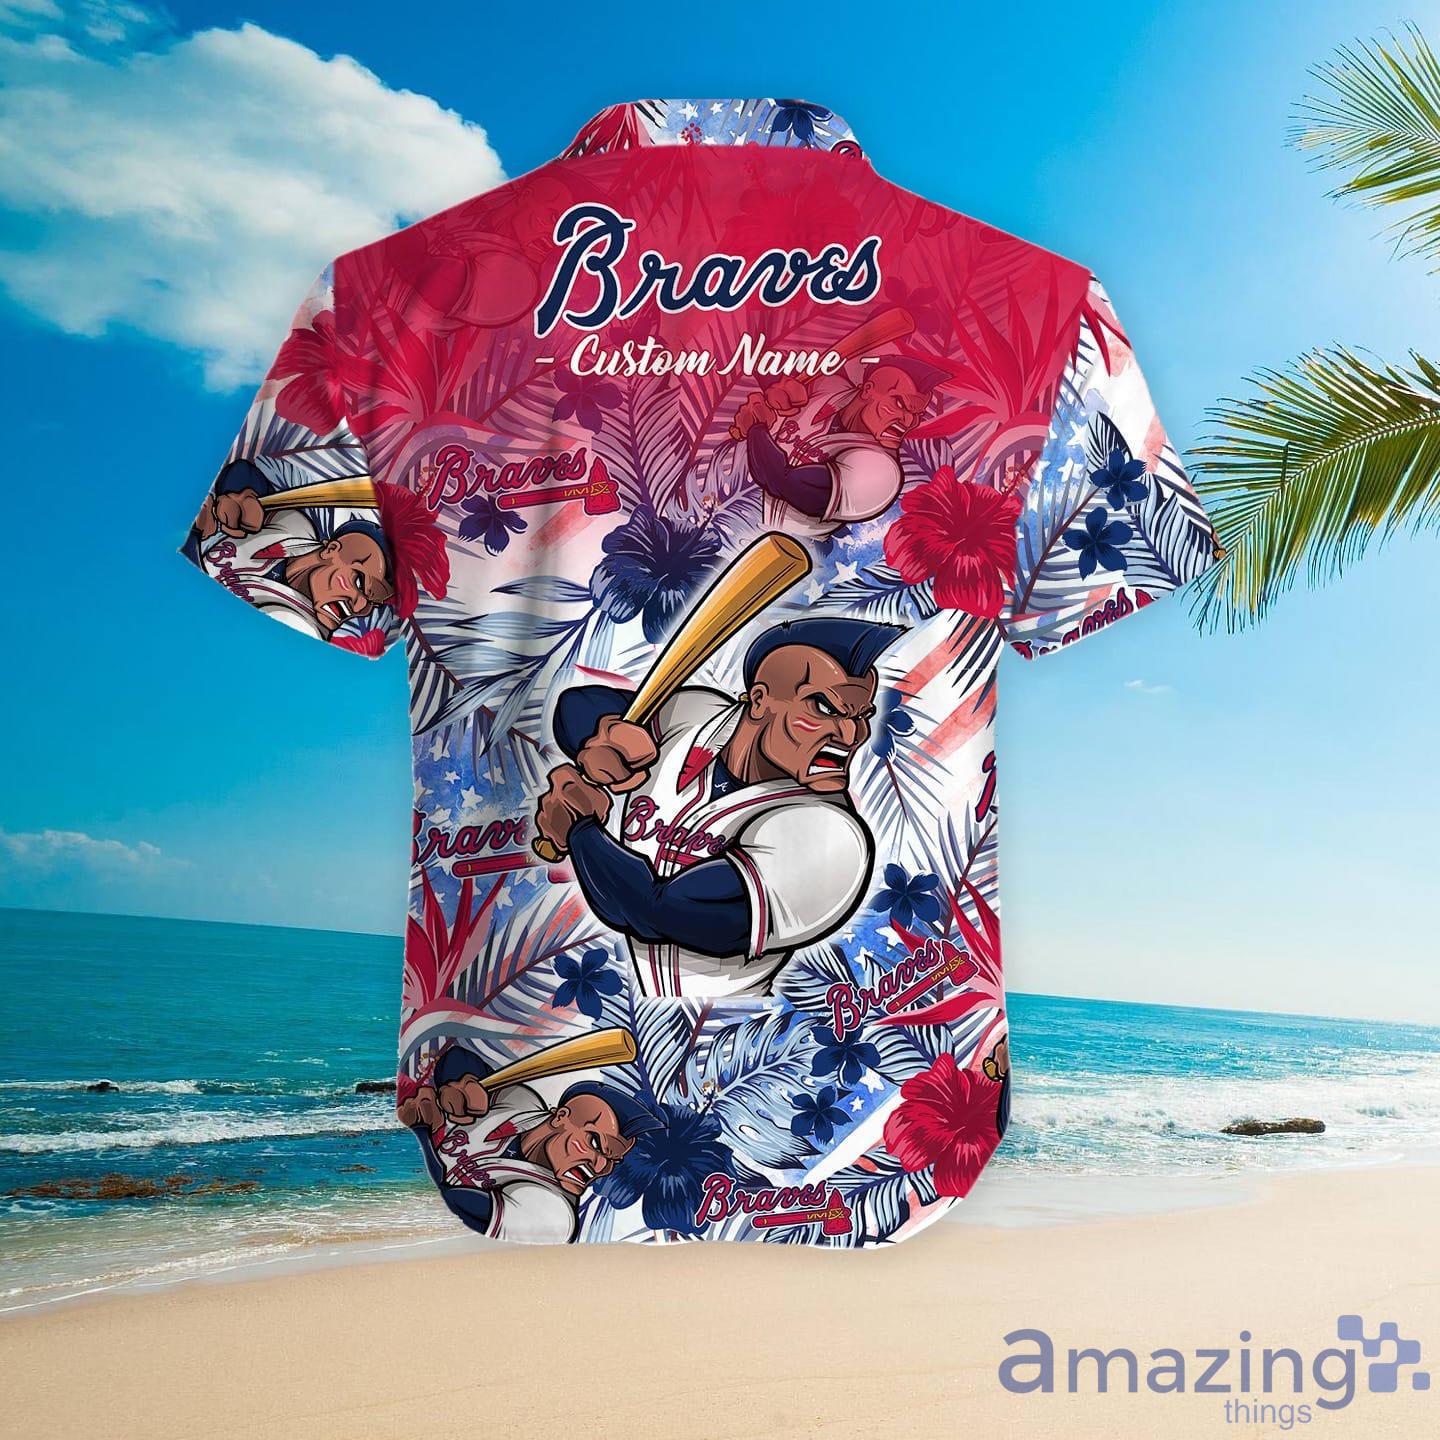 Atlanta Braves Funny Hawaiian Shirt - Growkoc